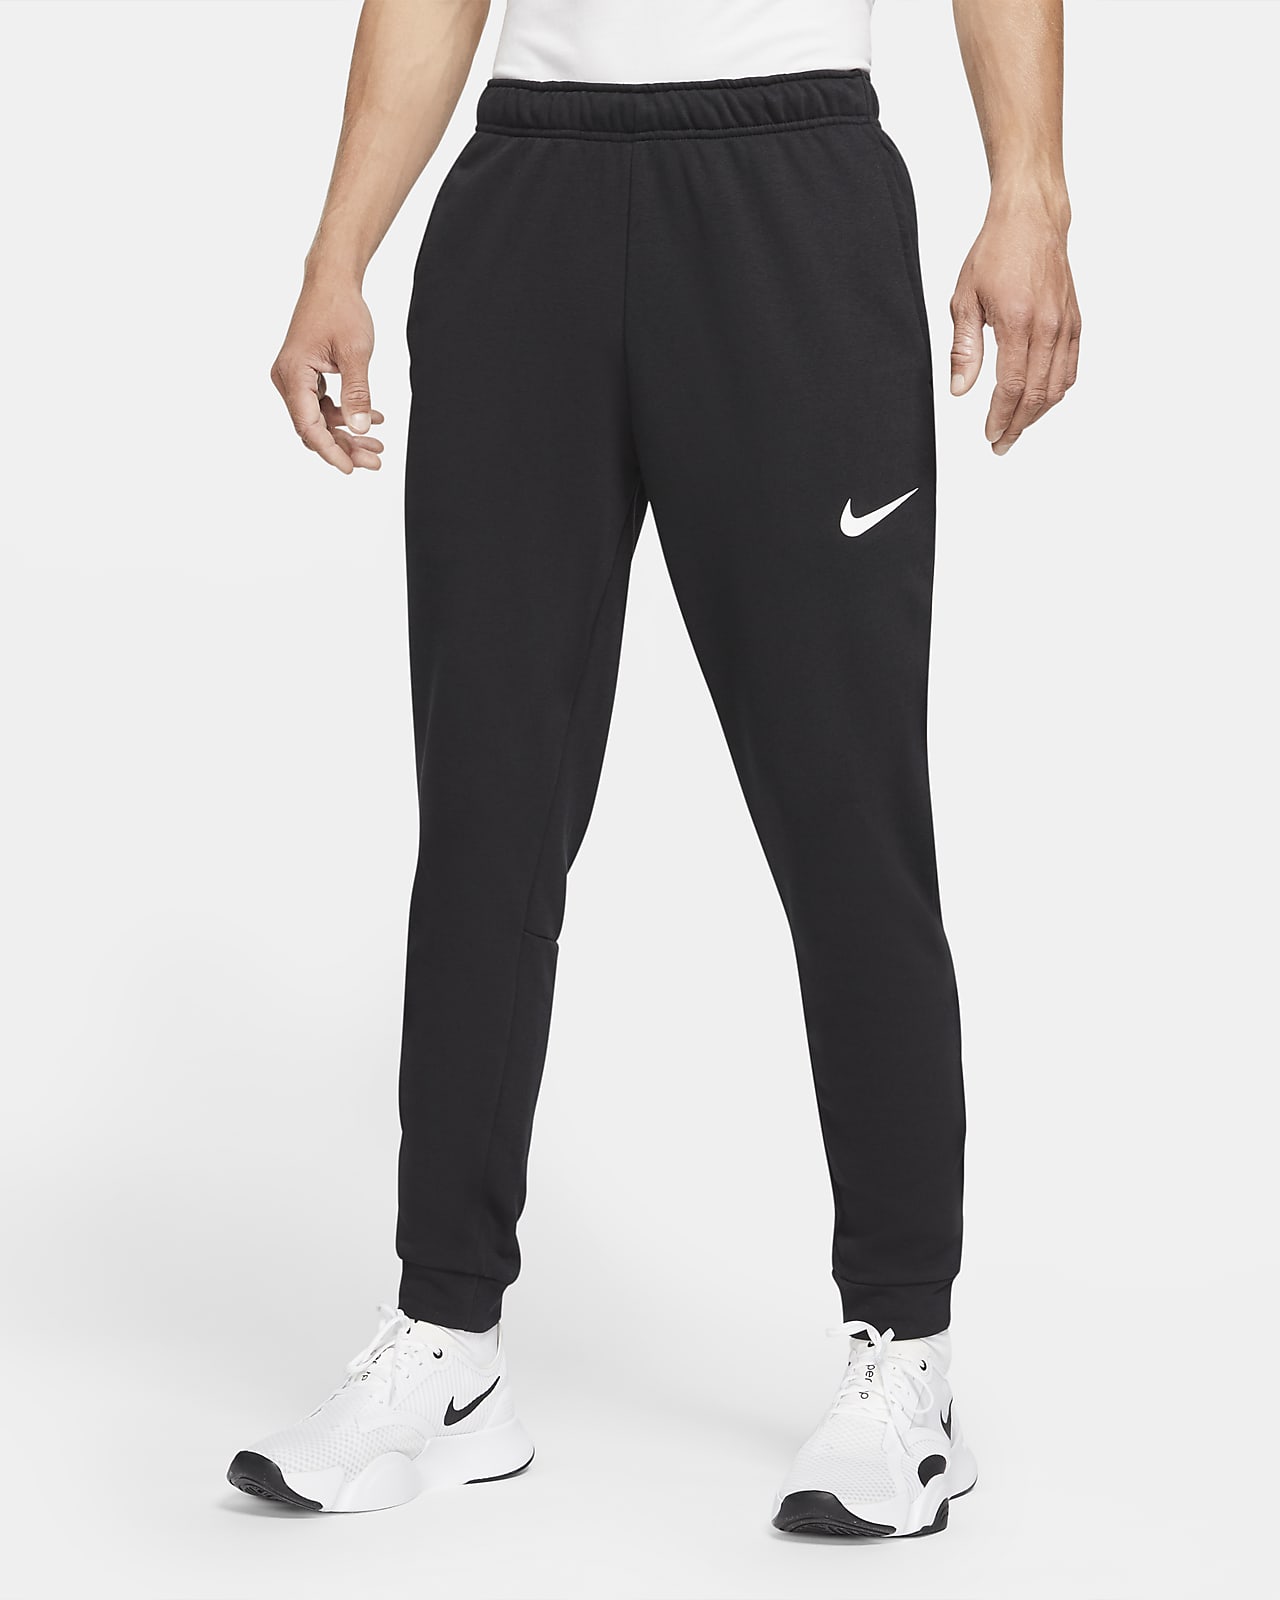 Pants de fitness de tejido Fleece Dri-FIT entallados para hombre Nike Dry